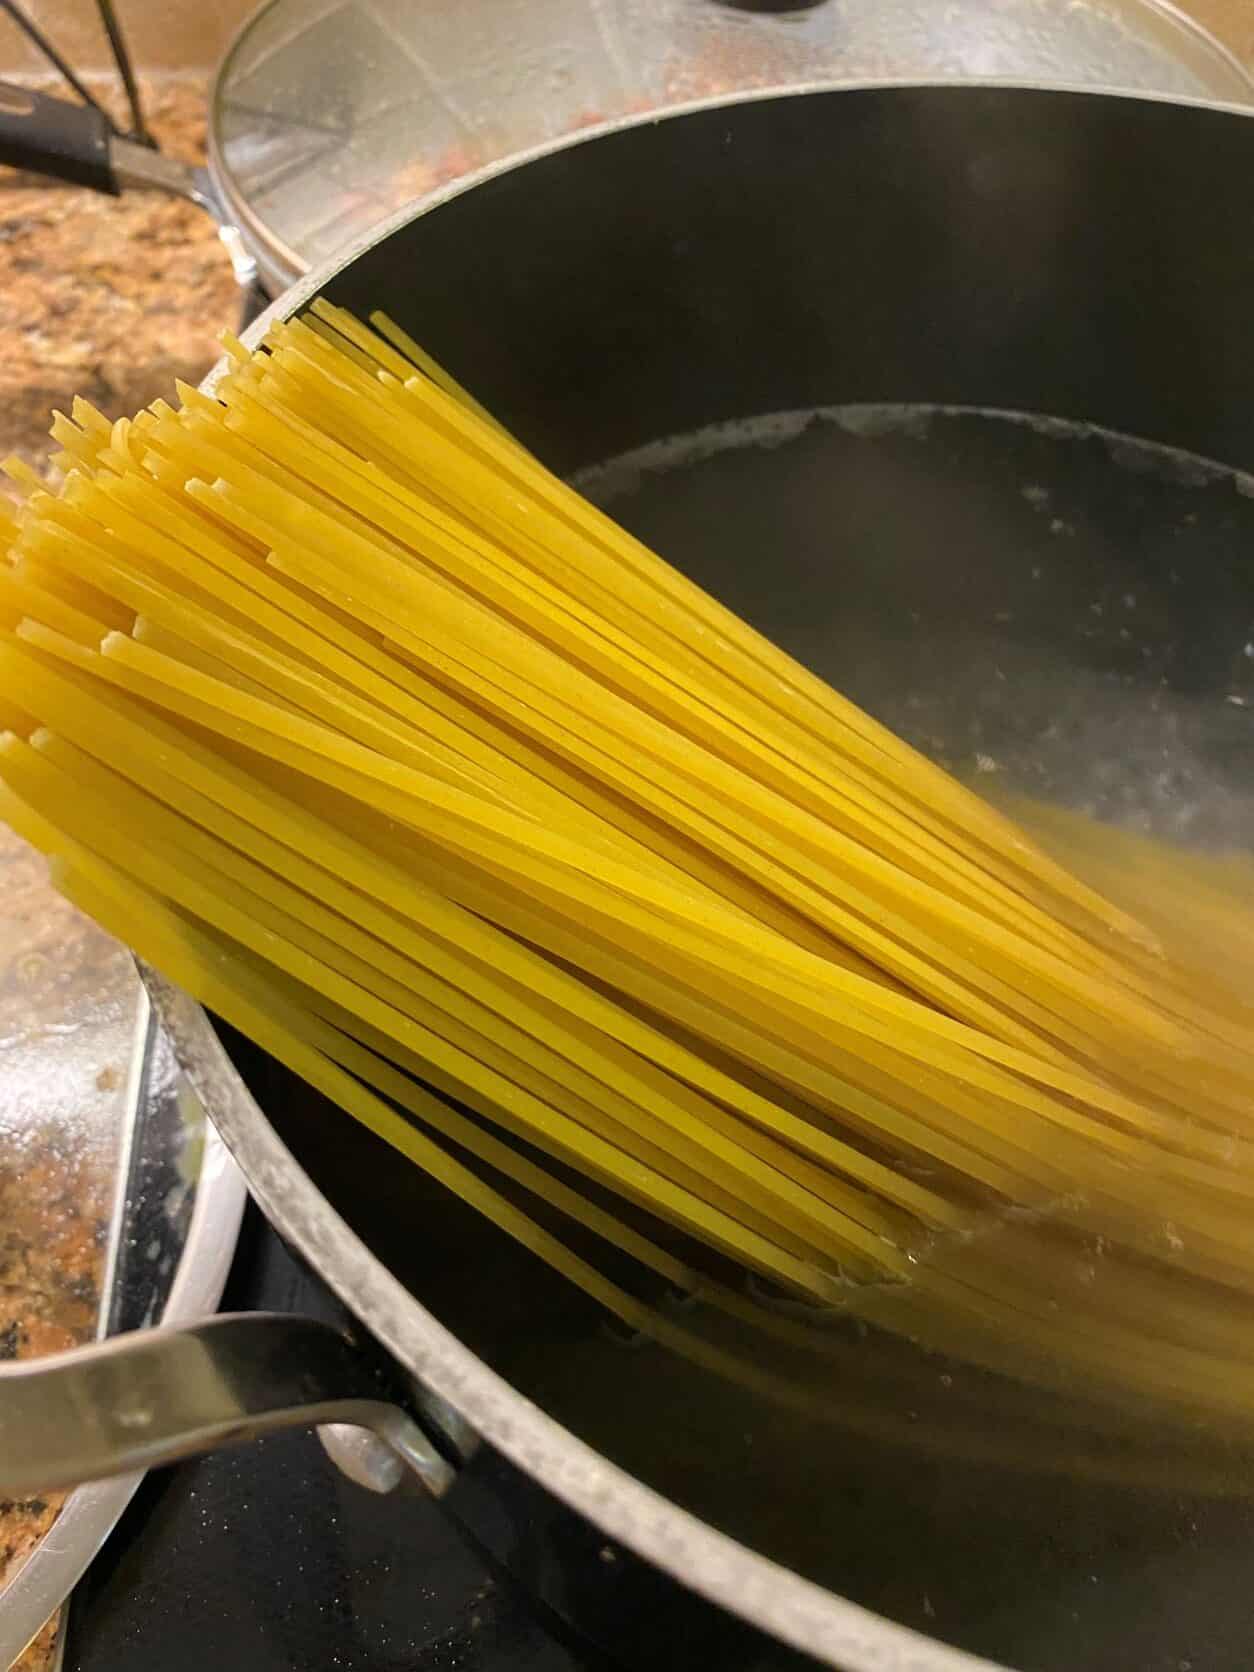 raw spaghetti in boiling water in a black pot